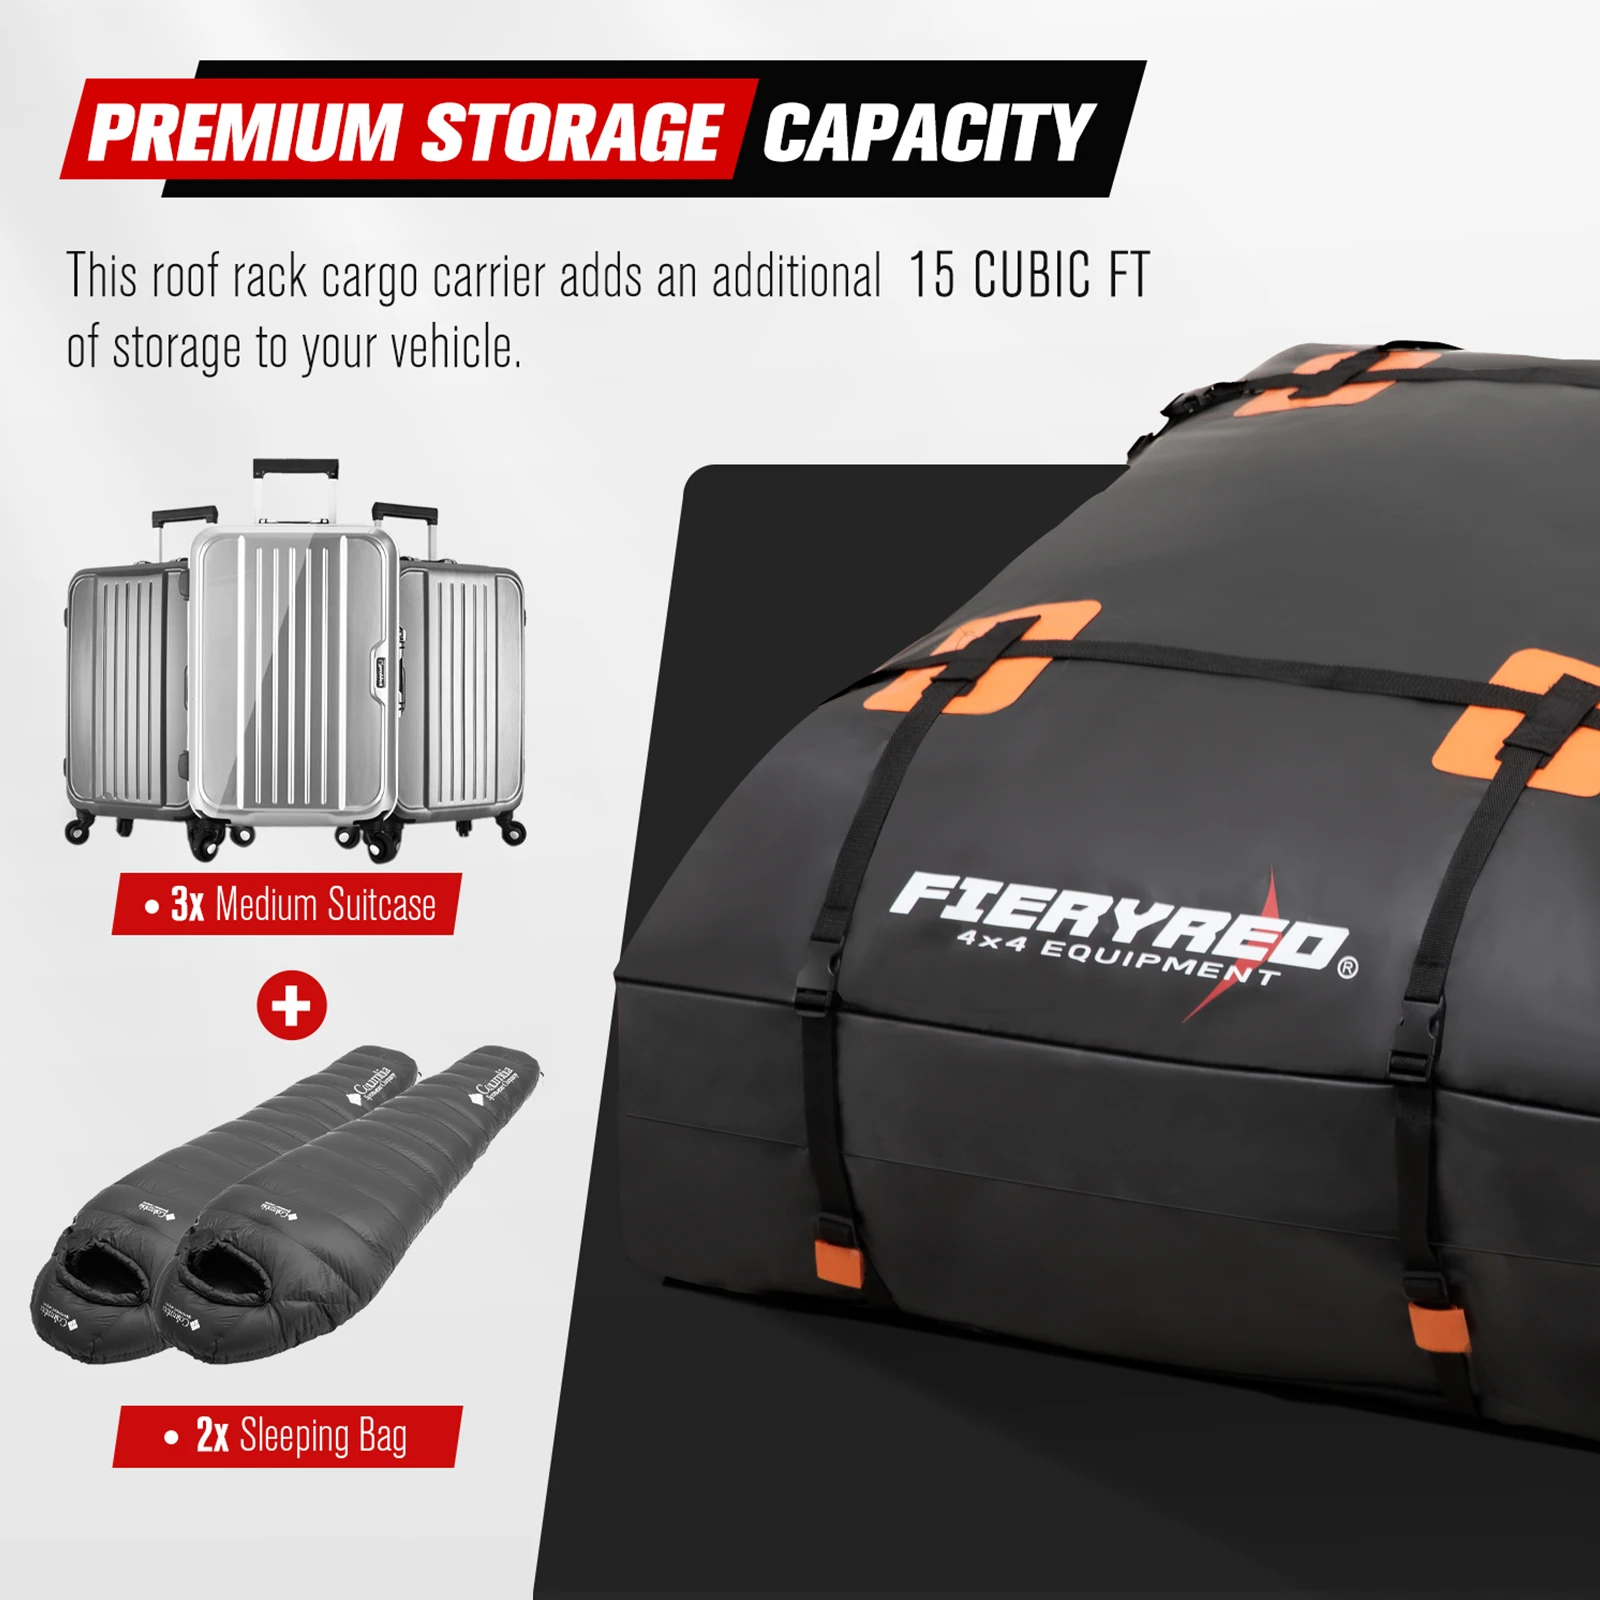 
Fieryred 15 Cubic Feet Waterproof Rooftop Bag Travel Storage Luggage Bag Soft Car Roof Bag Cargo Carrier 